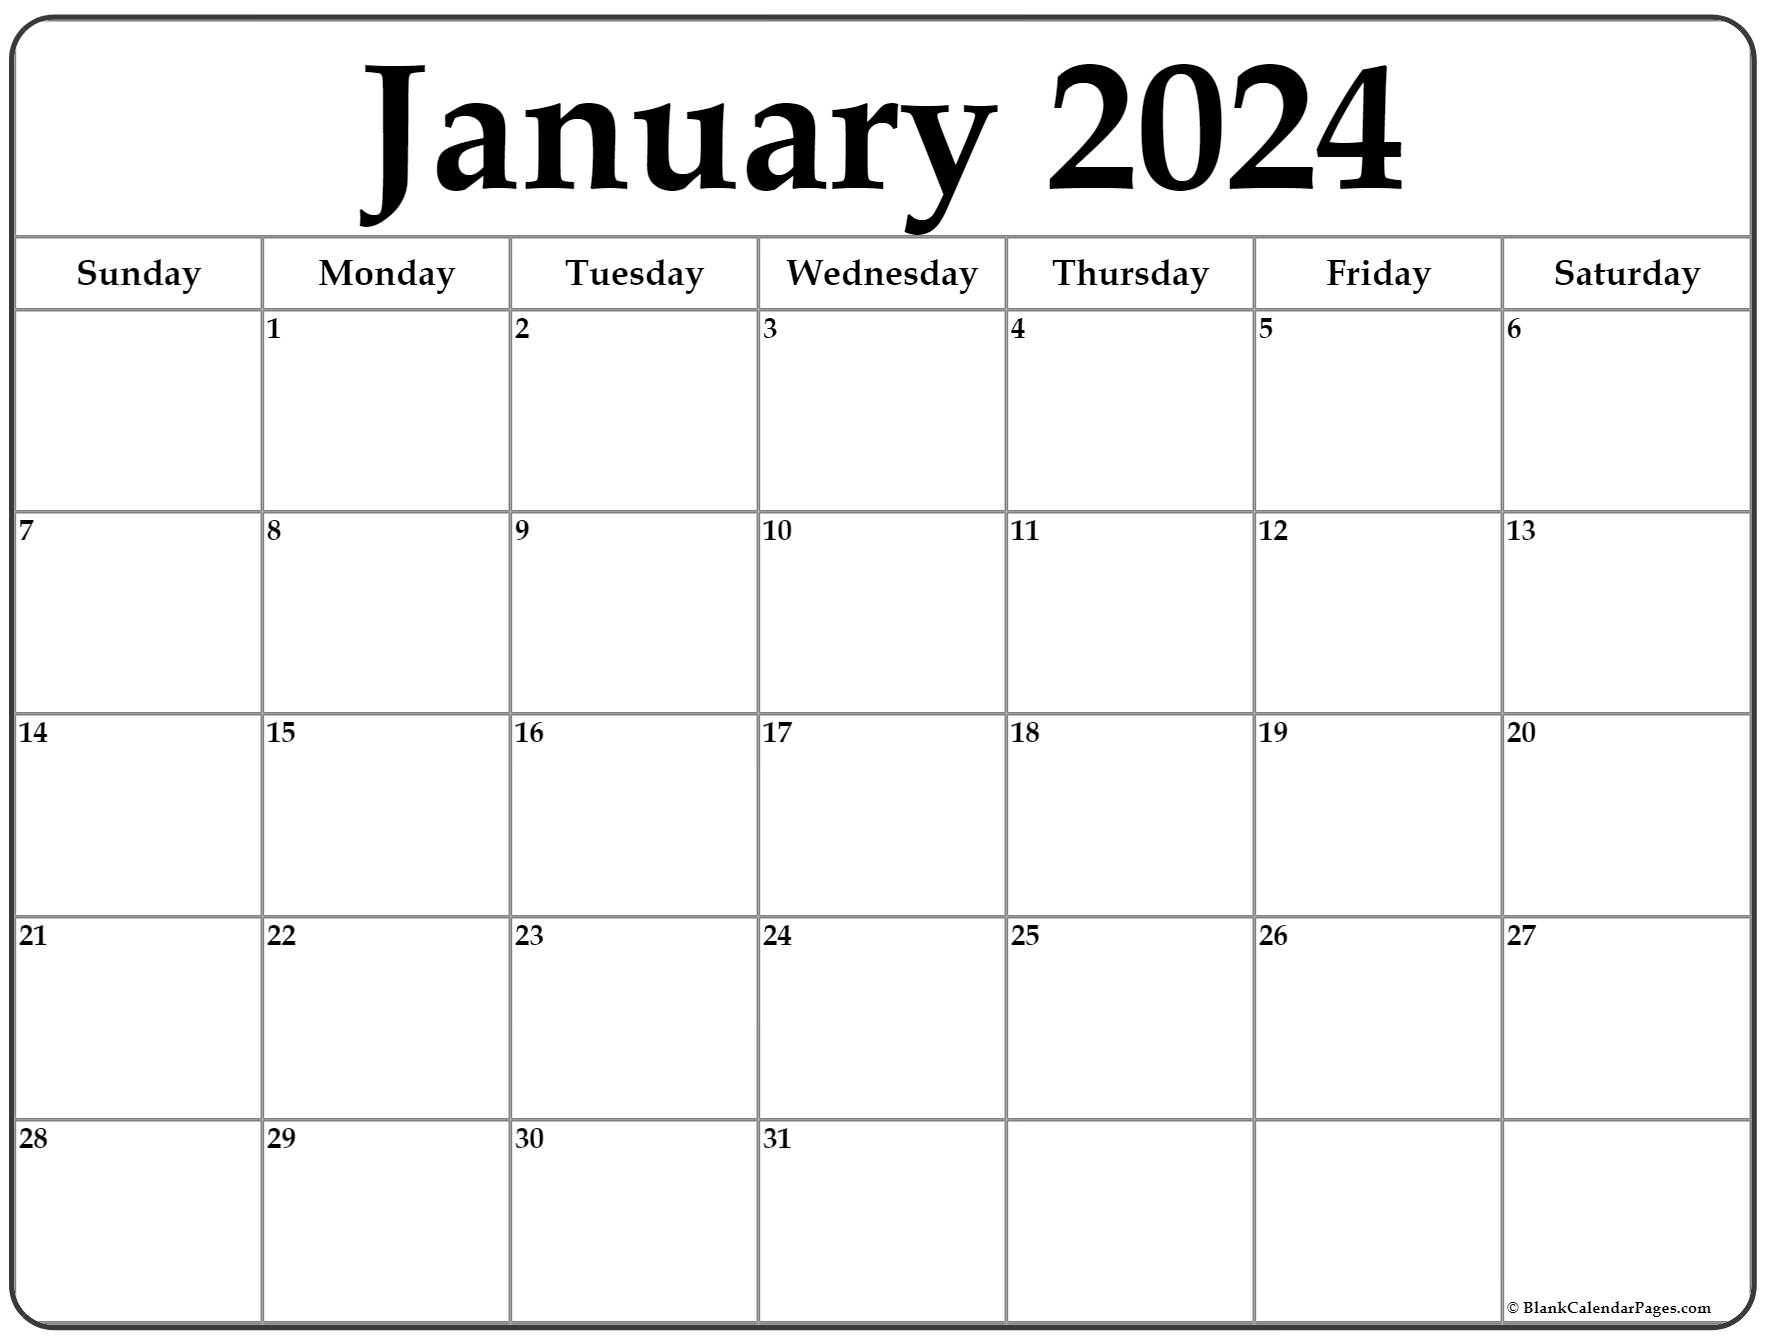 January 2024 Calendar | Free Printable Calendar for Free Monthly Calendar Printable 2024